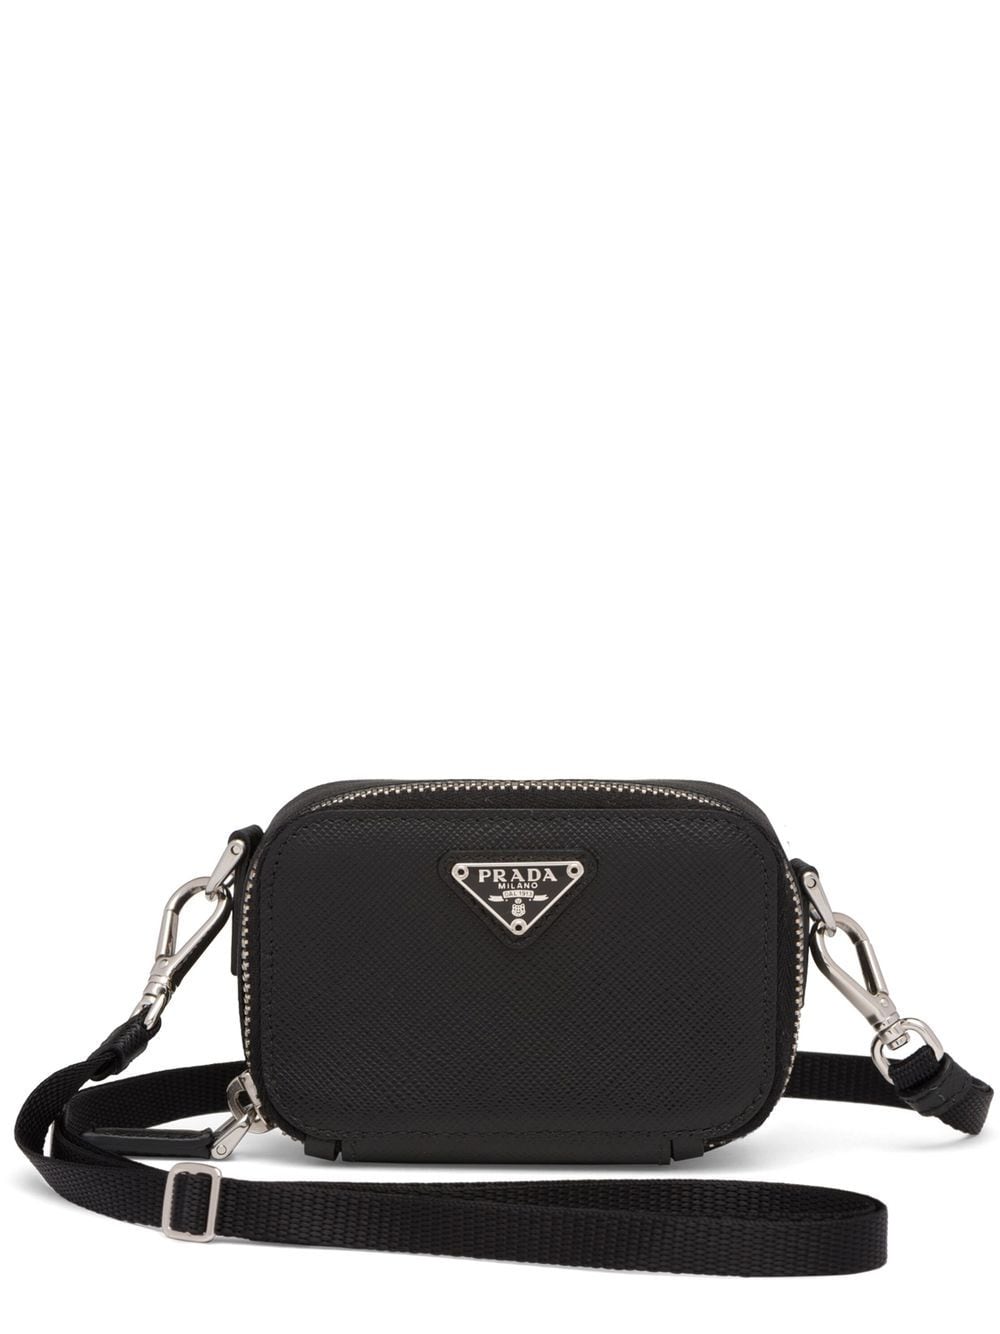 Image 1 of Prada triangle-logo leather case